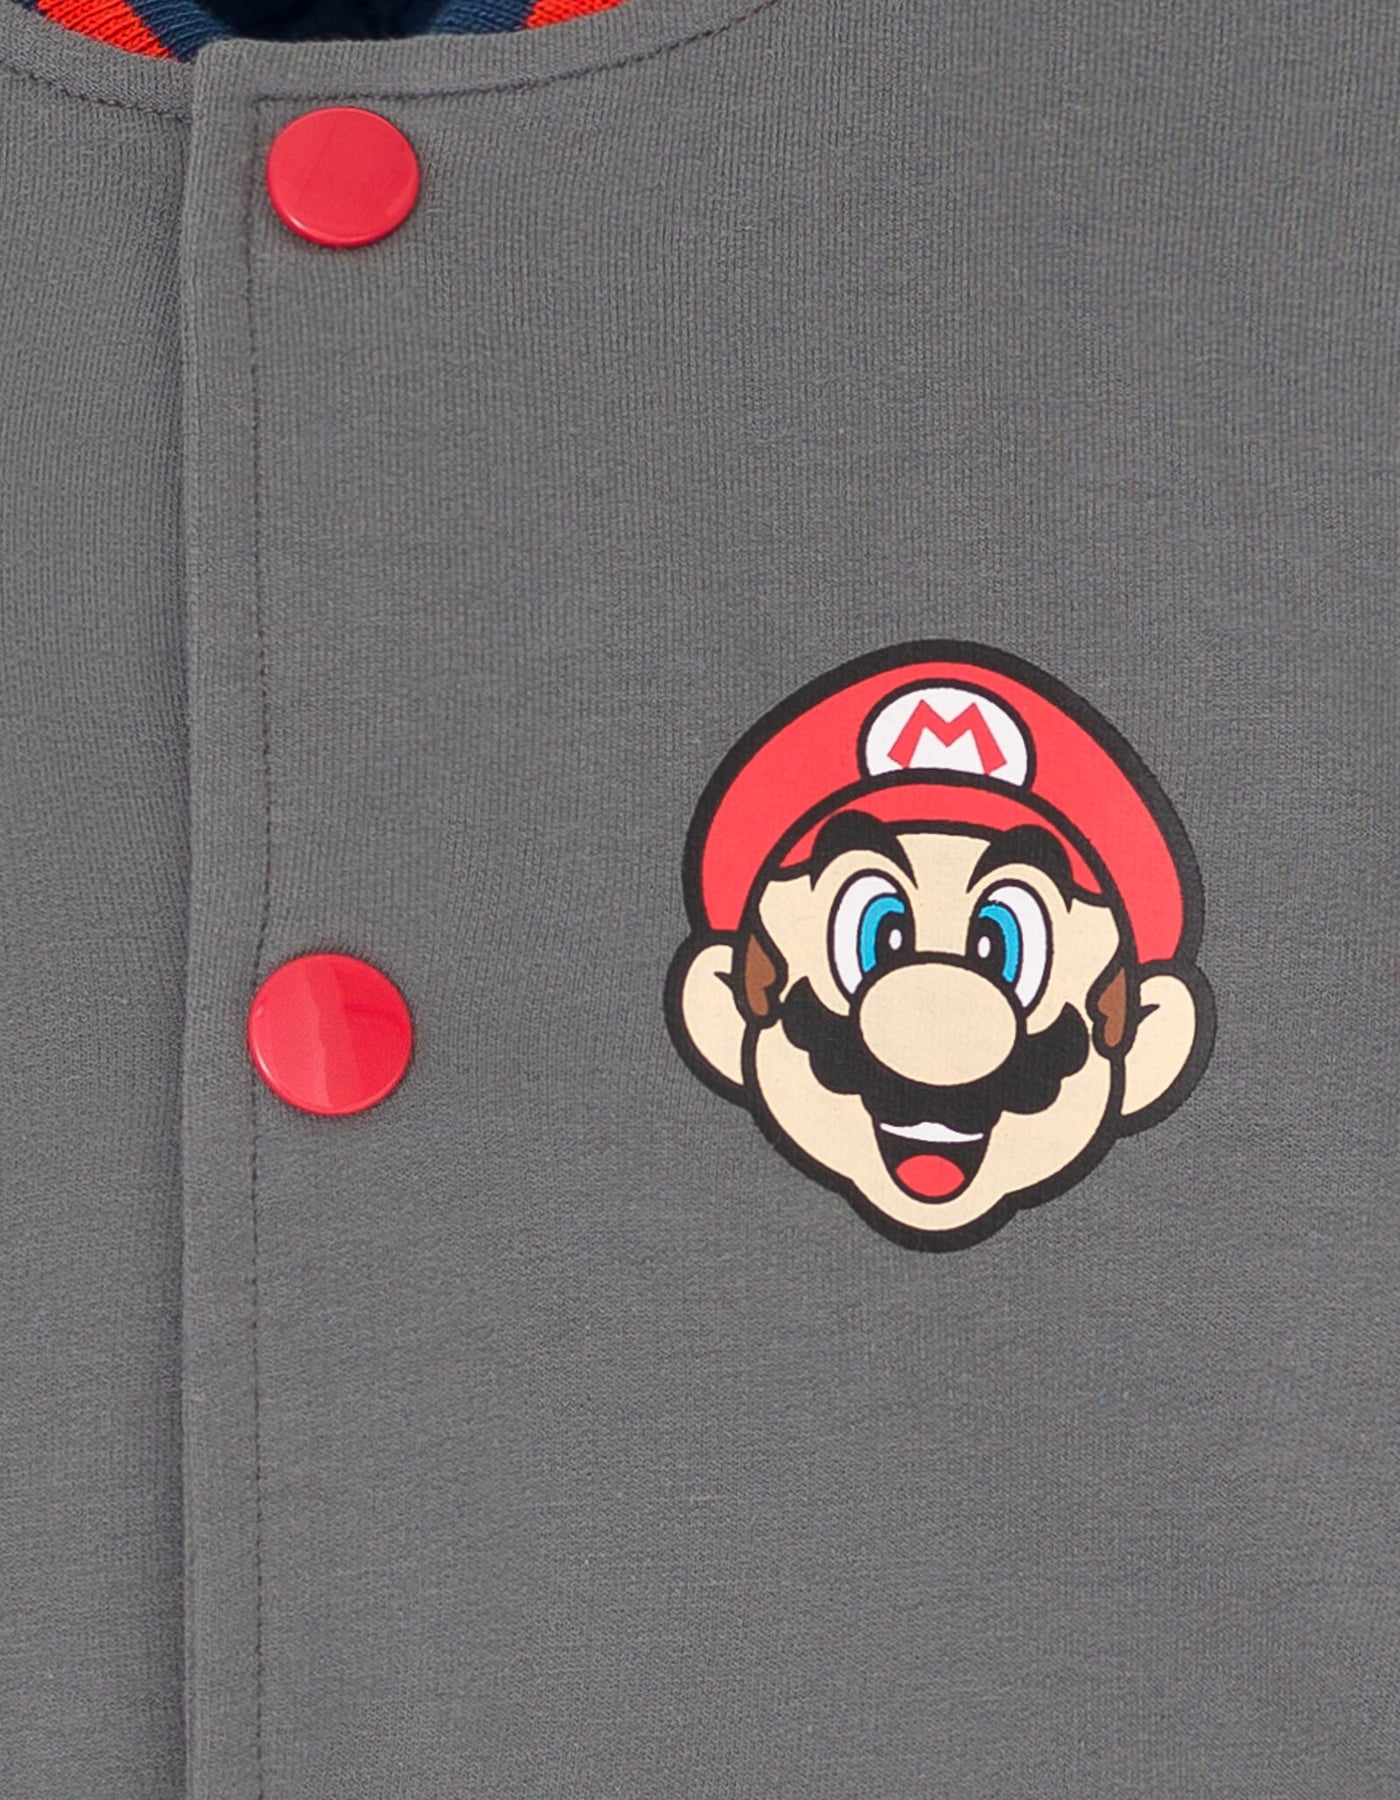 SUPER MARIO Nintendo Mario Varsity Jacket Bomber